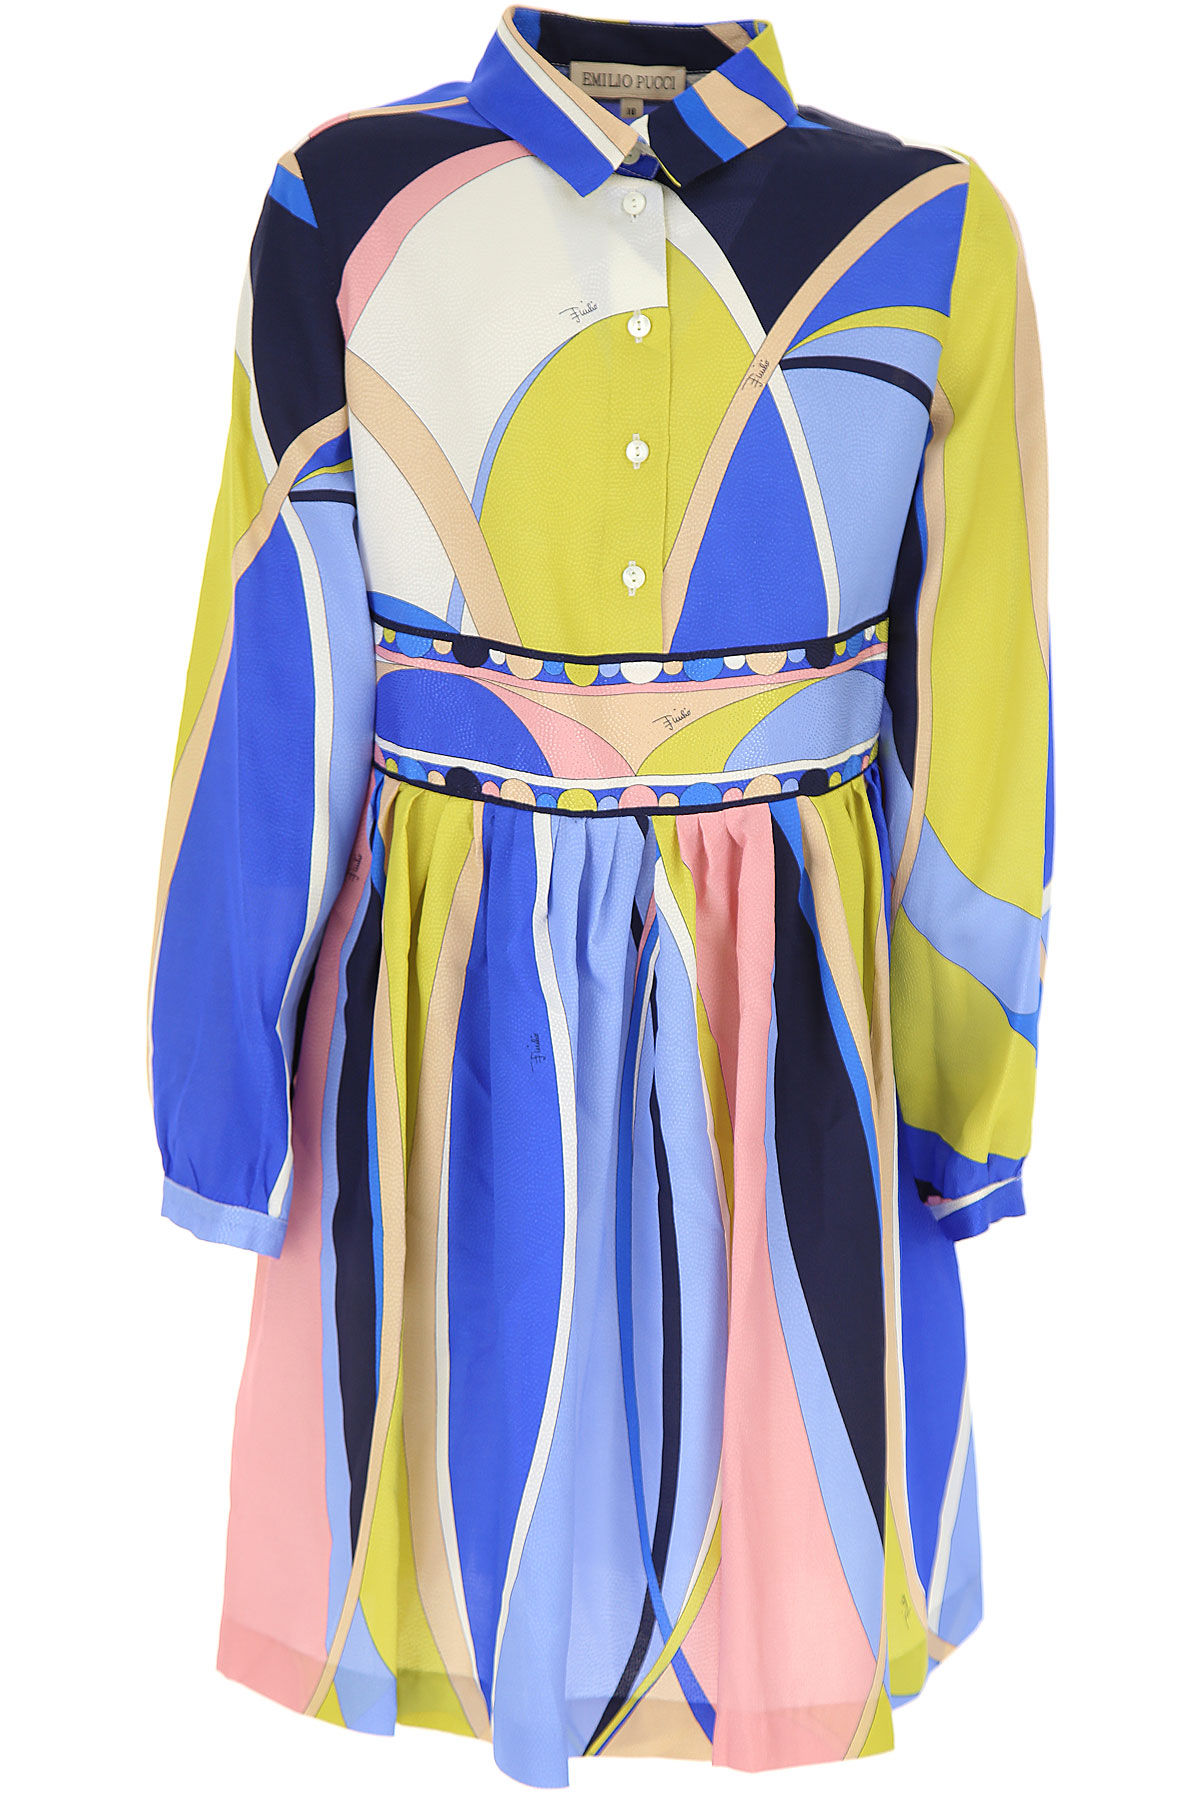 Emilio Pucci Kleid für Mädchen Günstig im Sale, Mehrfarbig, Viskose, 2017, 10Y 12Y 14Y 8Y